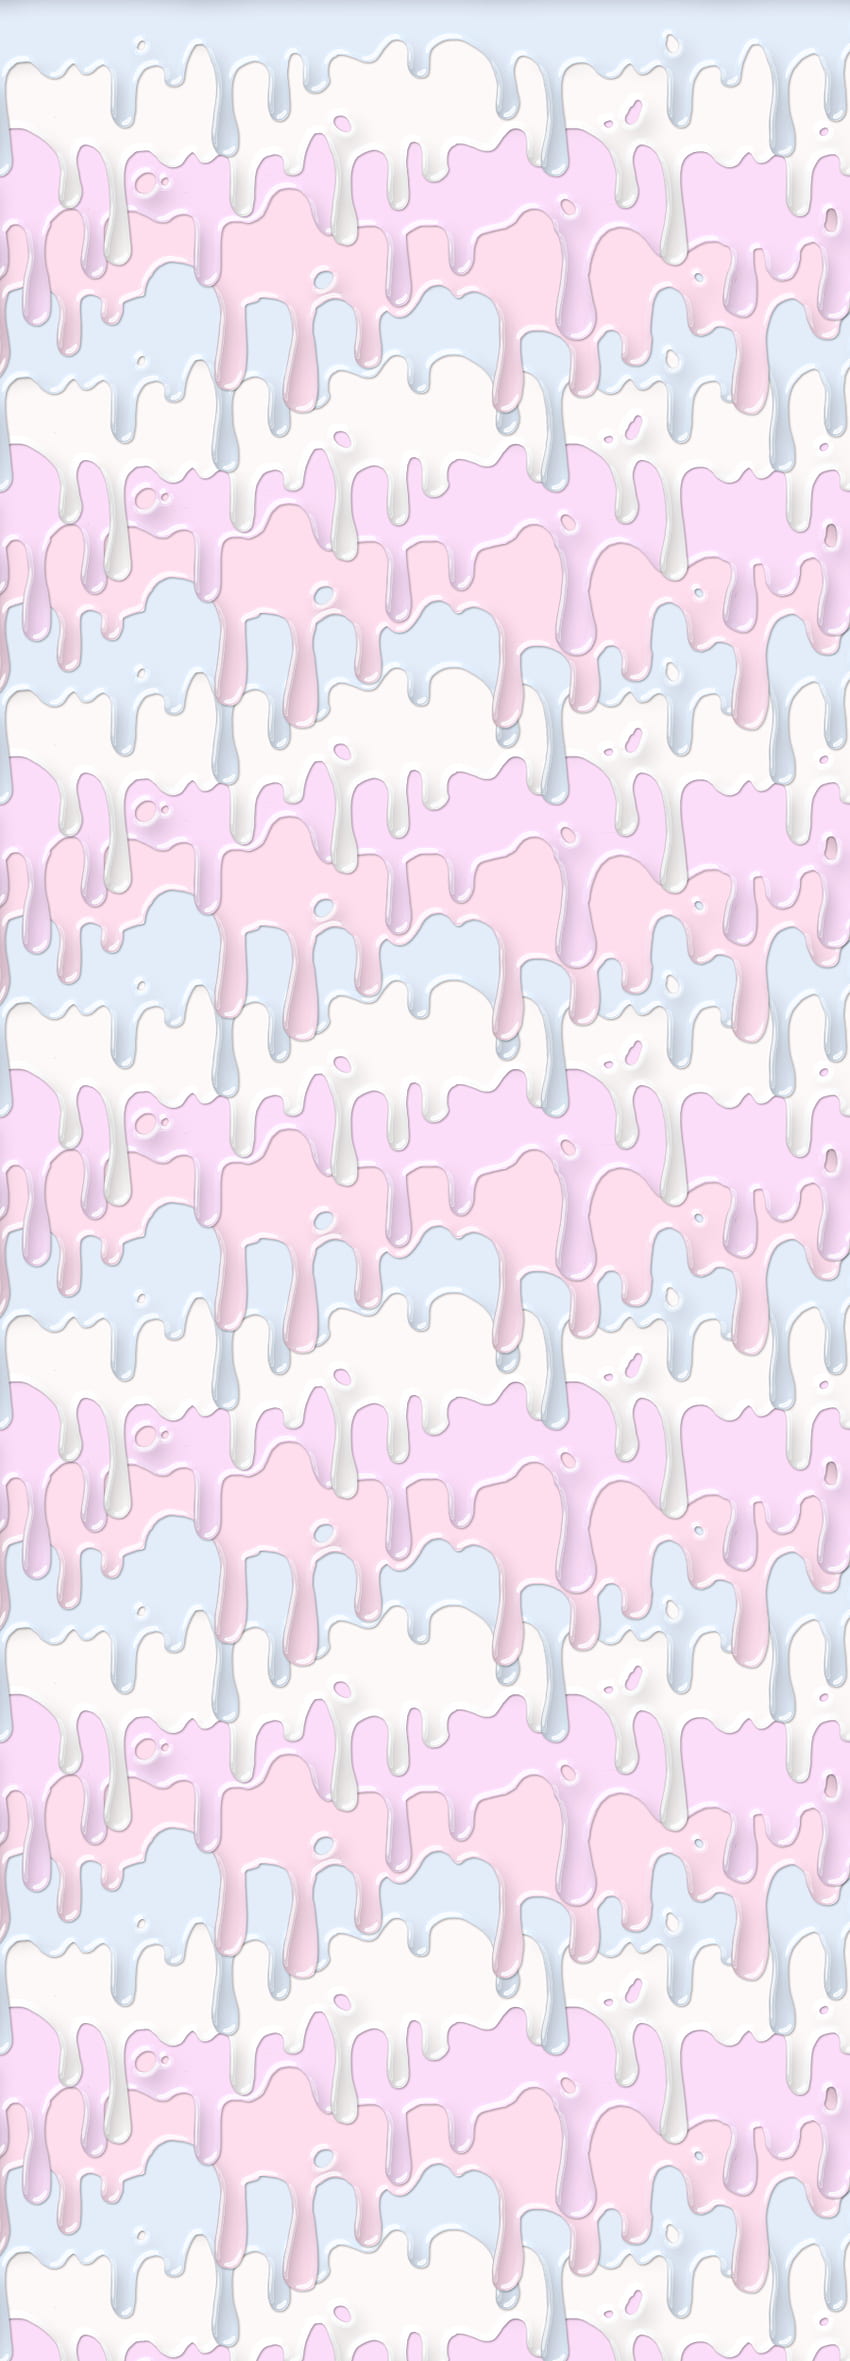 pastel goth pattern tumblr